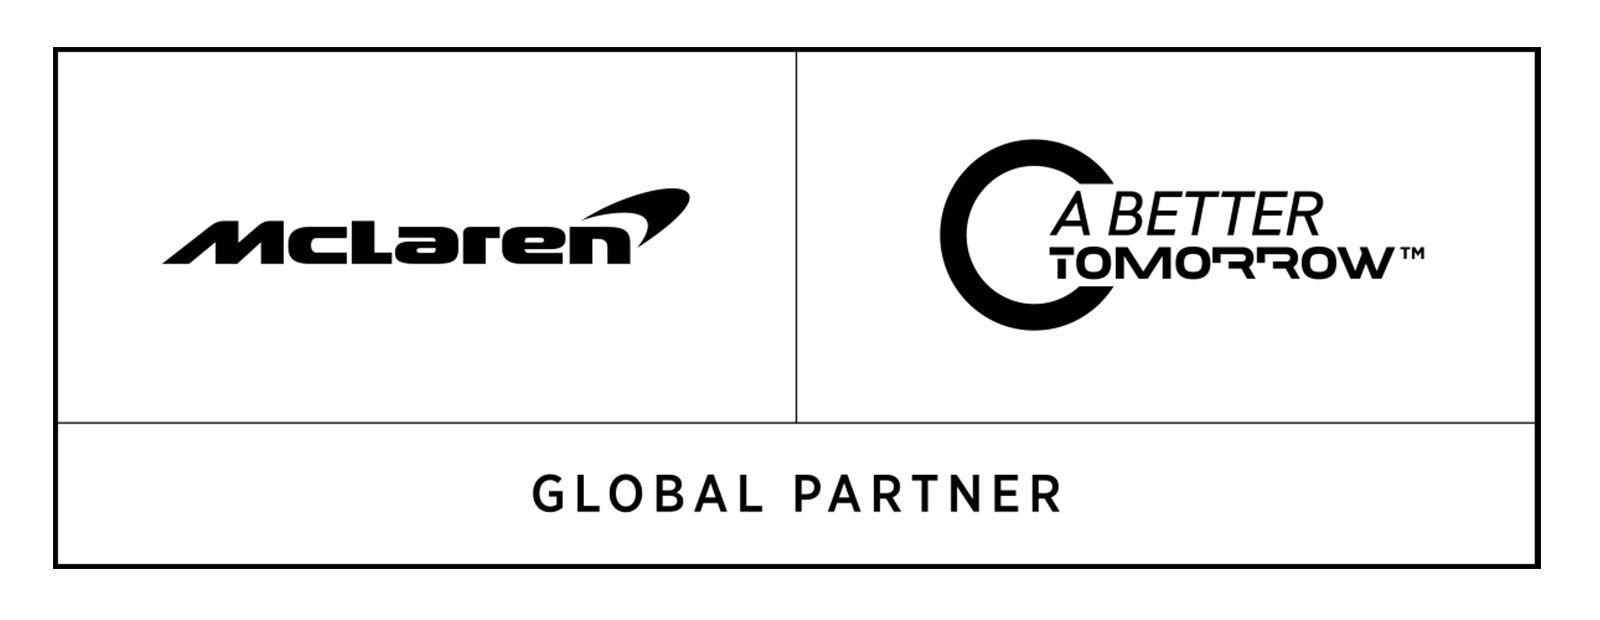 British American Tobacco Logo - McLaren Formula 1 - McLaren Racing announces global partnership with ...